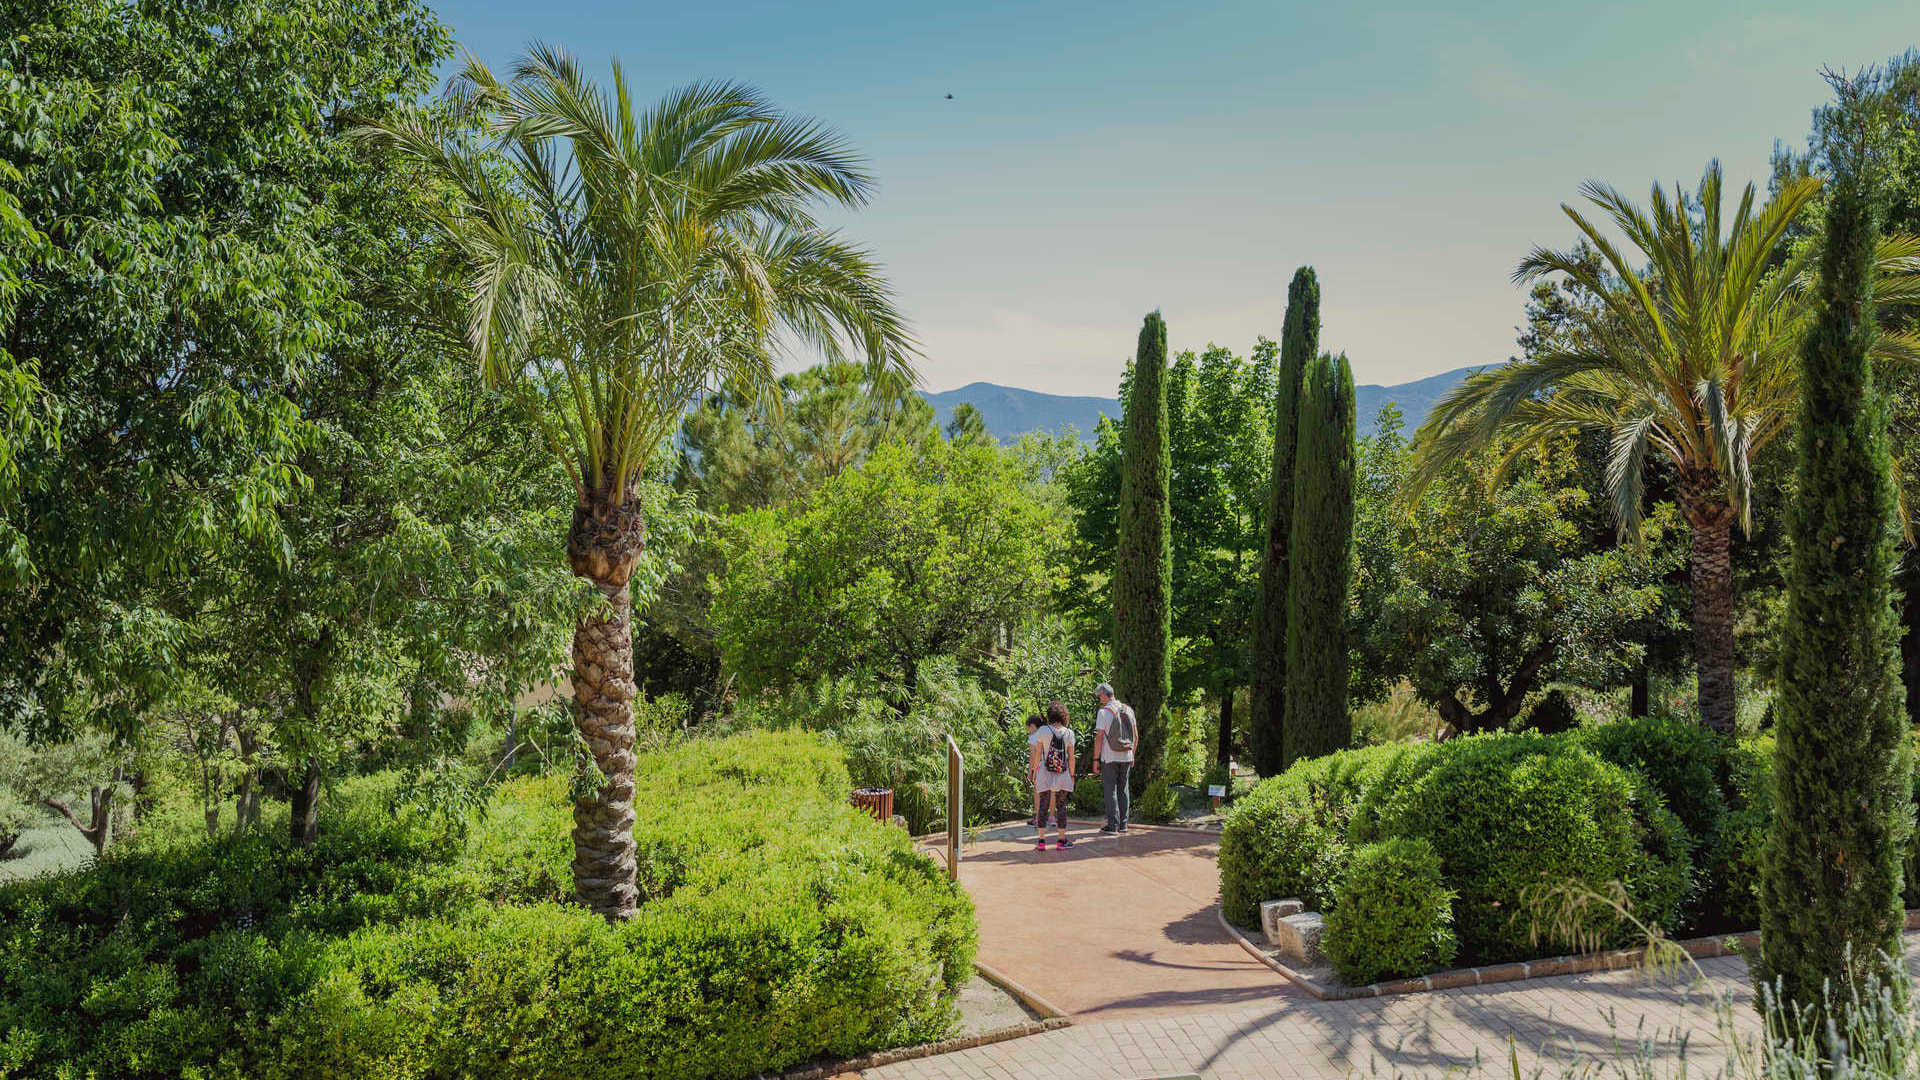 Enjoy the beautiful gardens in the Region of Valencia